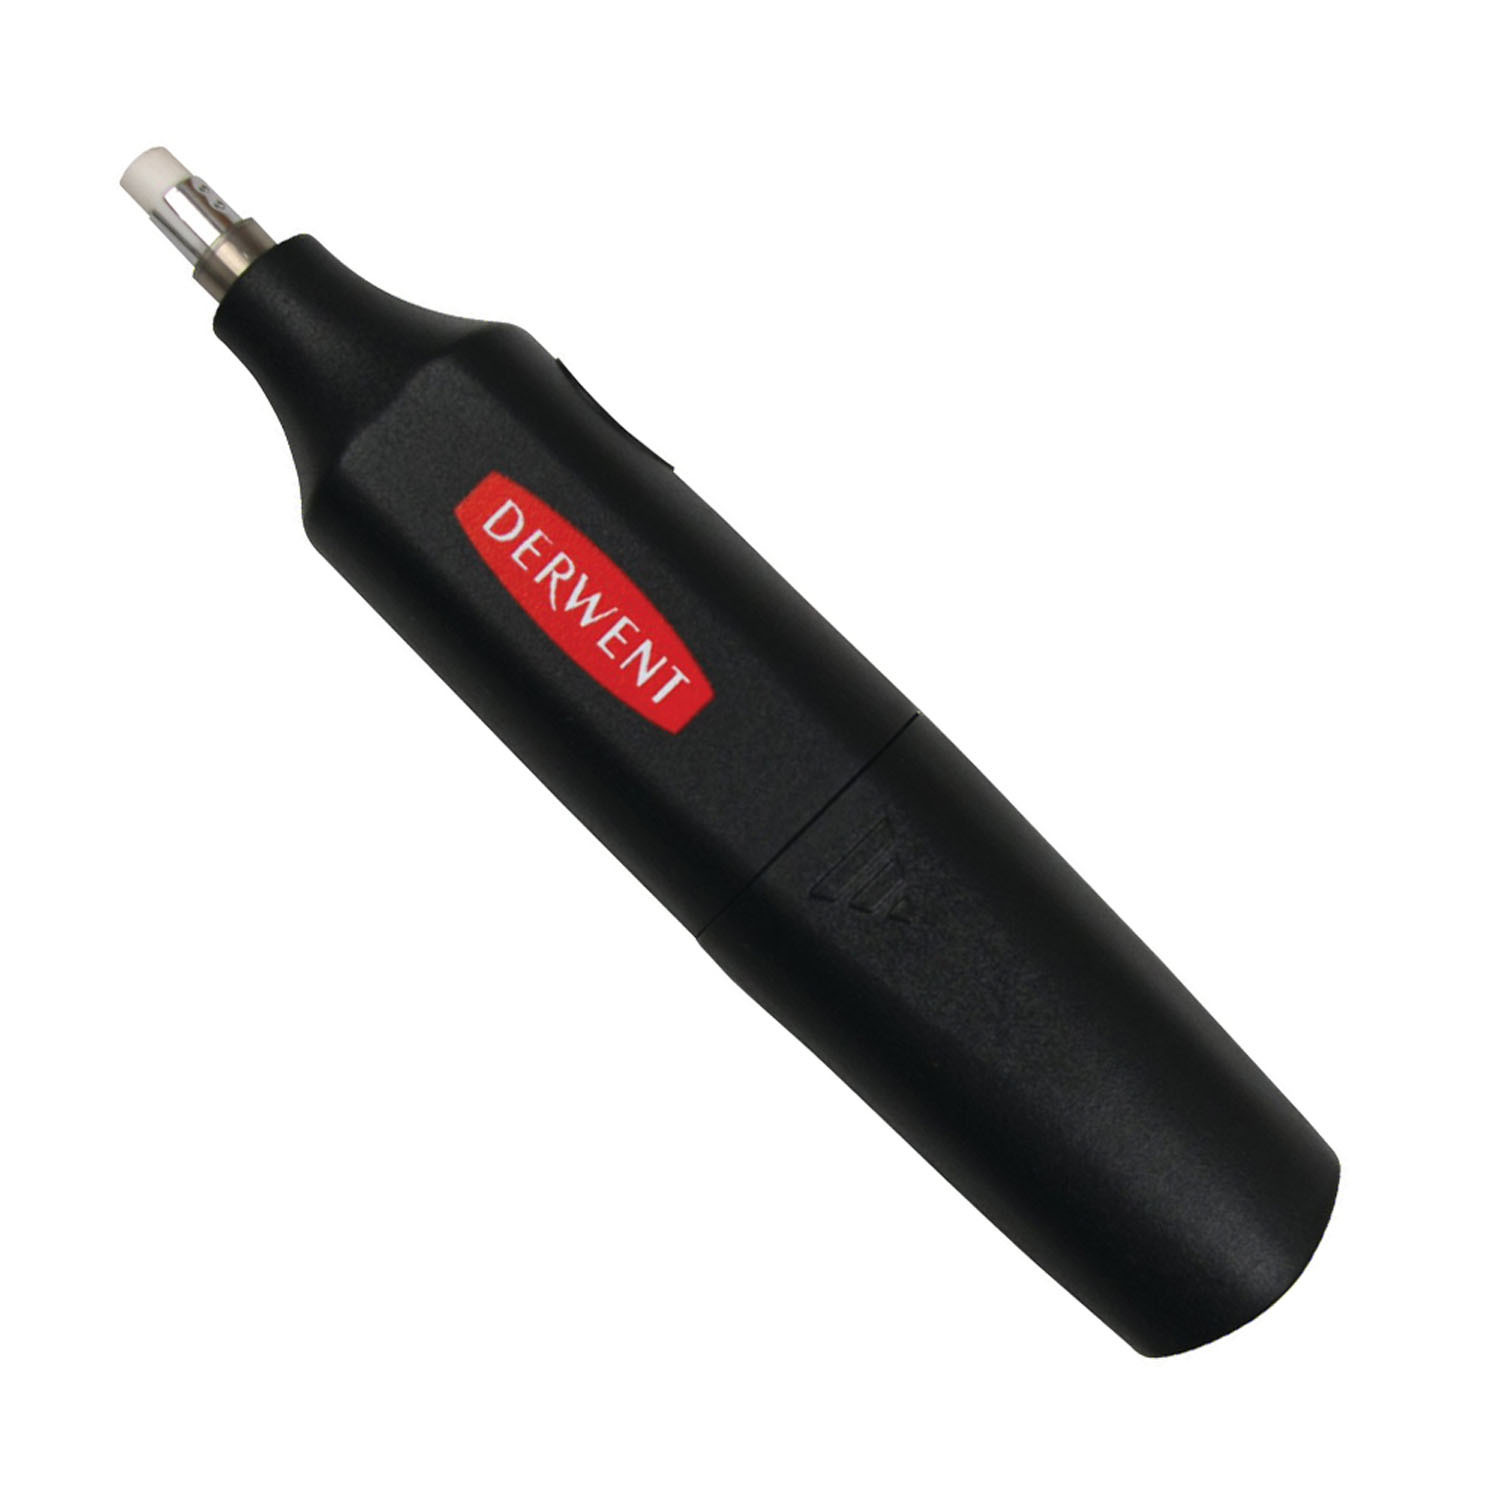 Derwent Battery Operated Eraser - Black Image 2